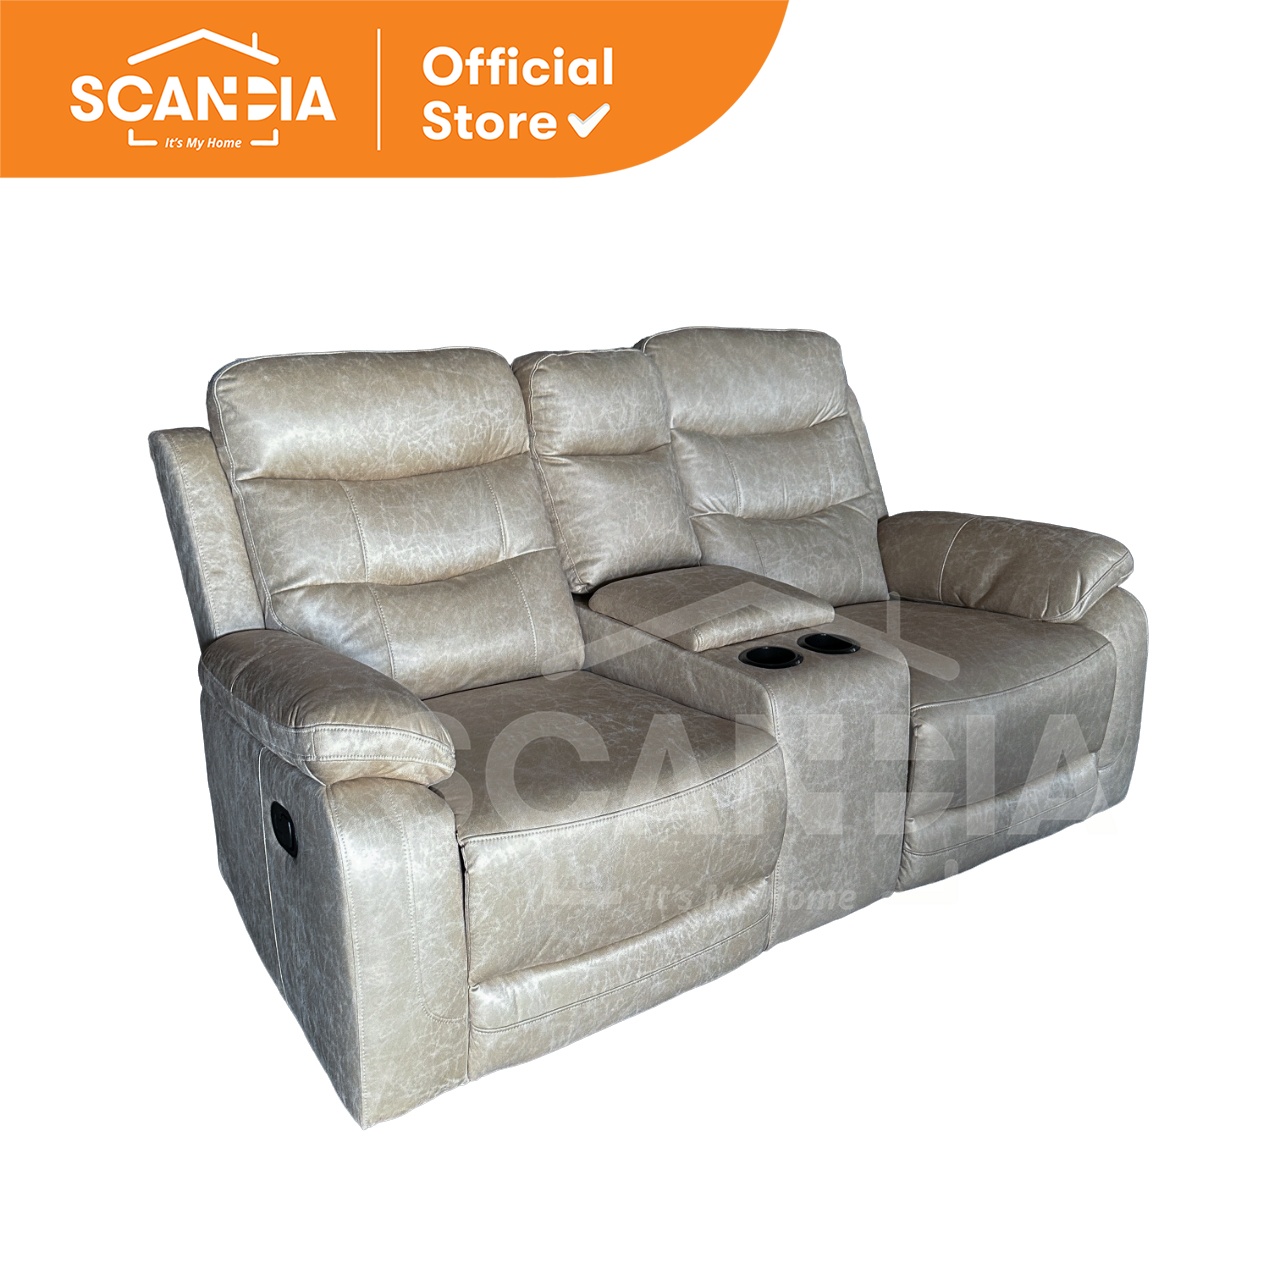 Promo Scandia Sofa Recliner 2s Malthe